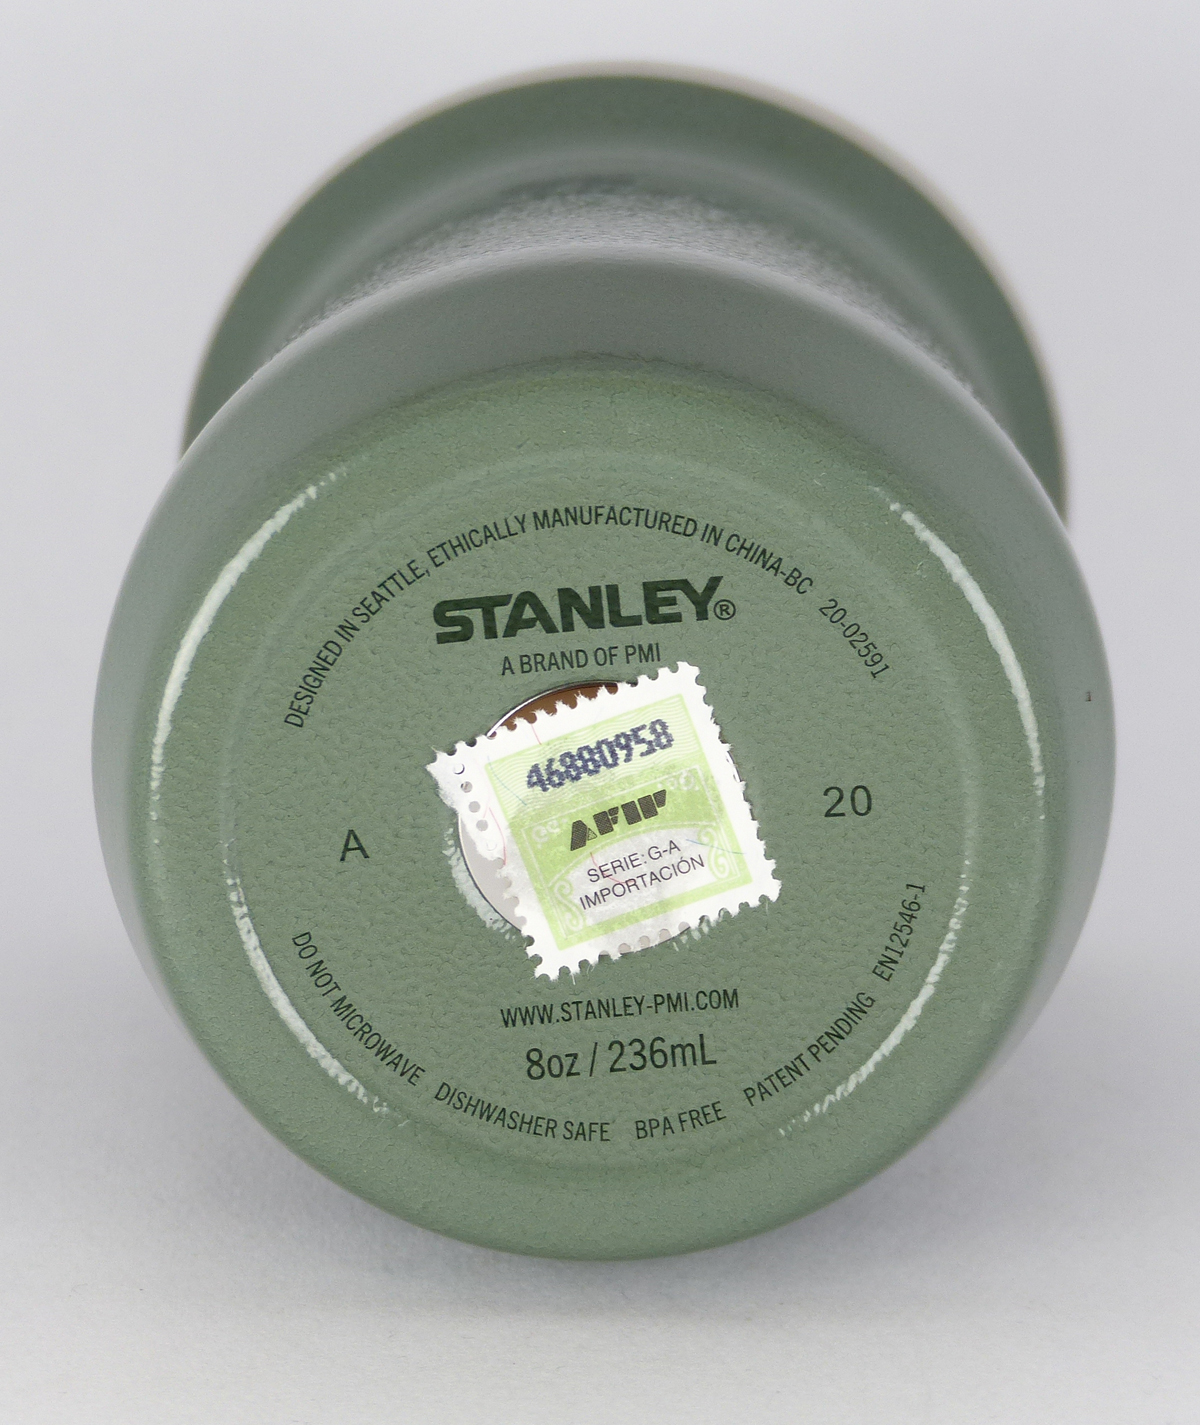 STANLEY BOMBILLA Mate Stanley Spoon Original Acero Inoxidable Green